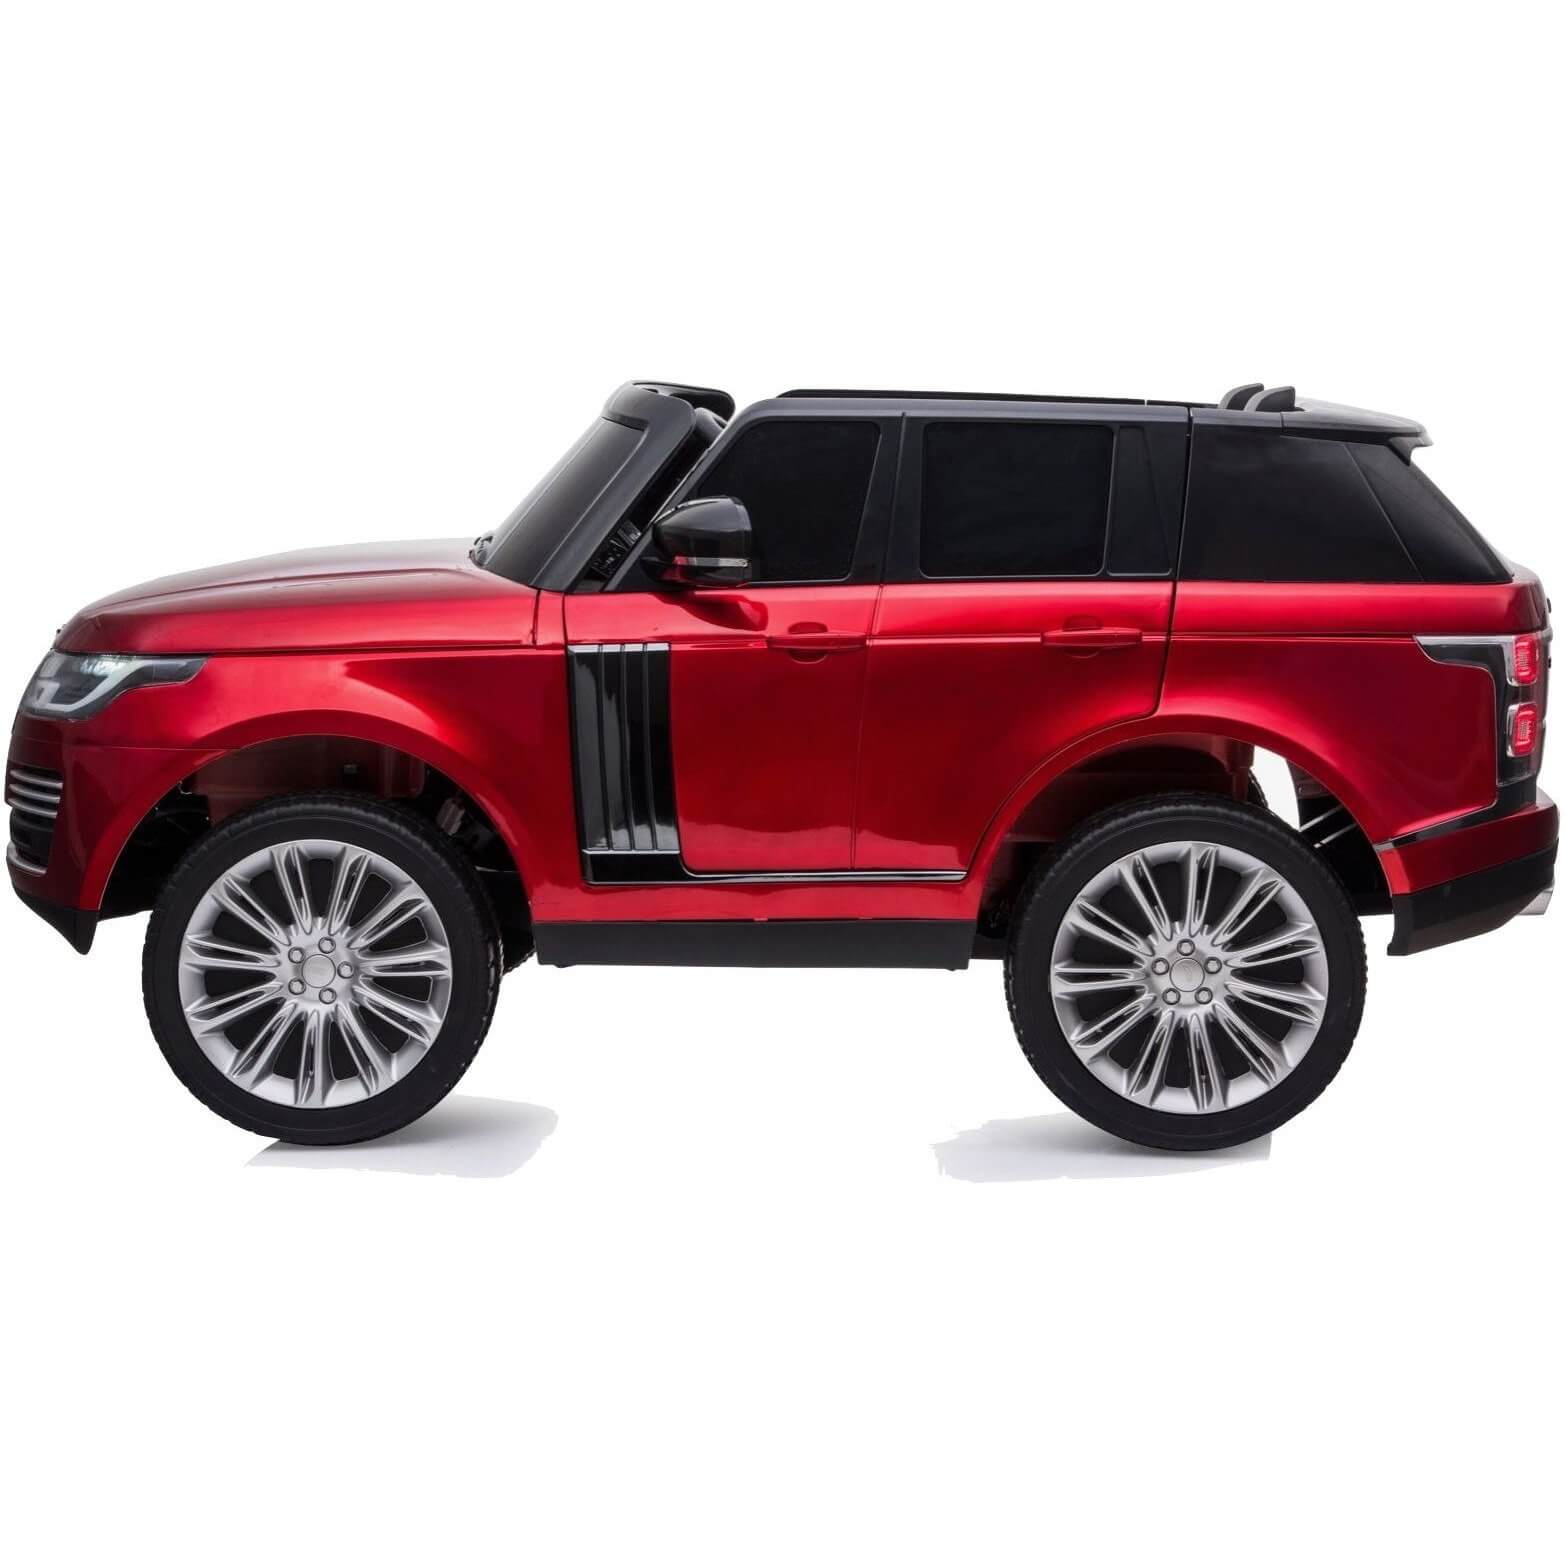 Red Licensed Toys car Premium Metallic Range Rover Vogue 2 seats for kids 24V Side